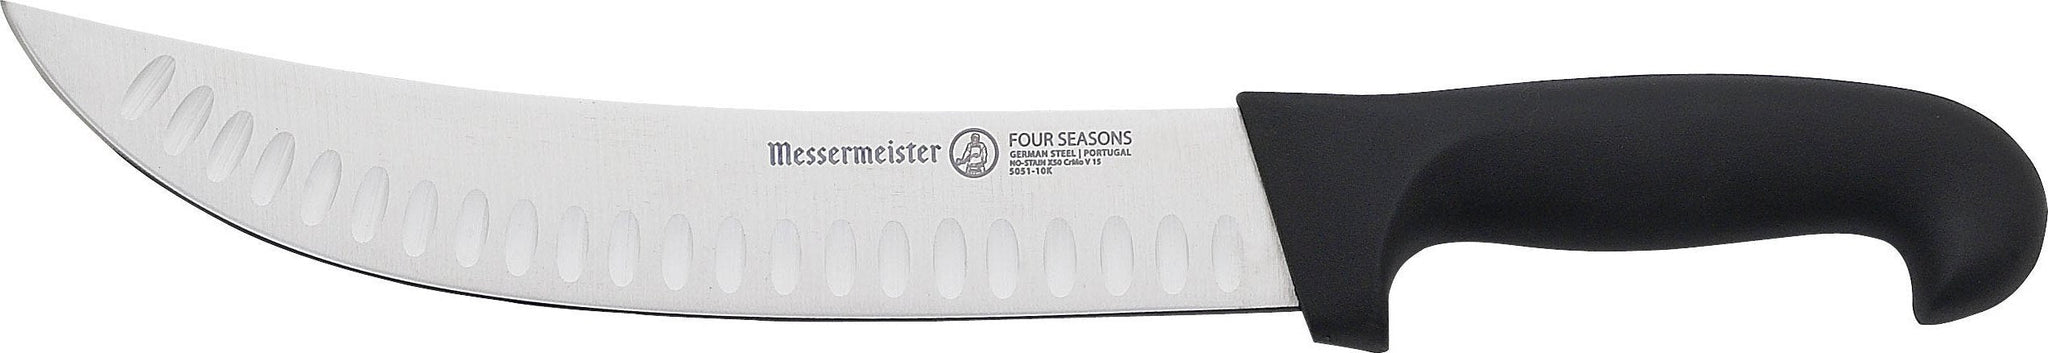 Messermeister - Four Seasons 10" Kullenschliff Scimitar Knife - 5051-10K